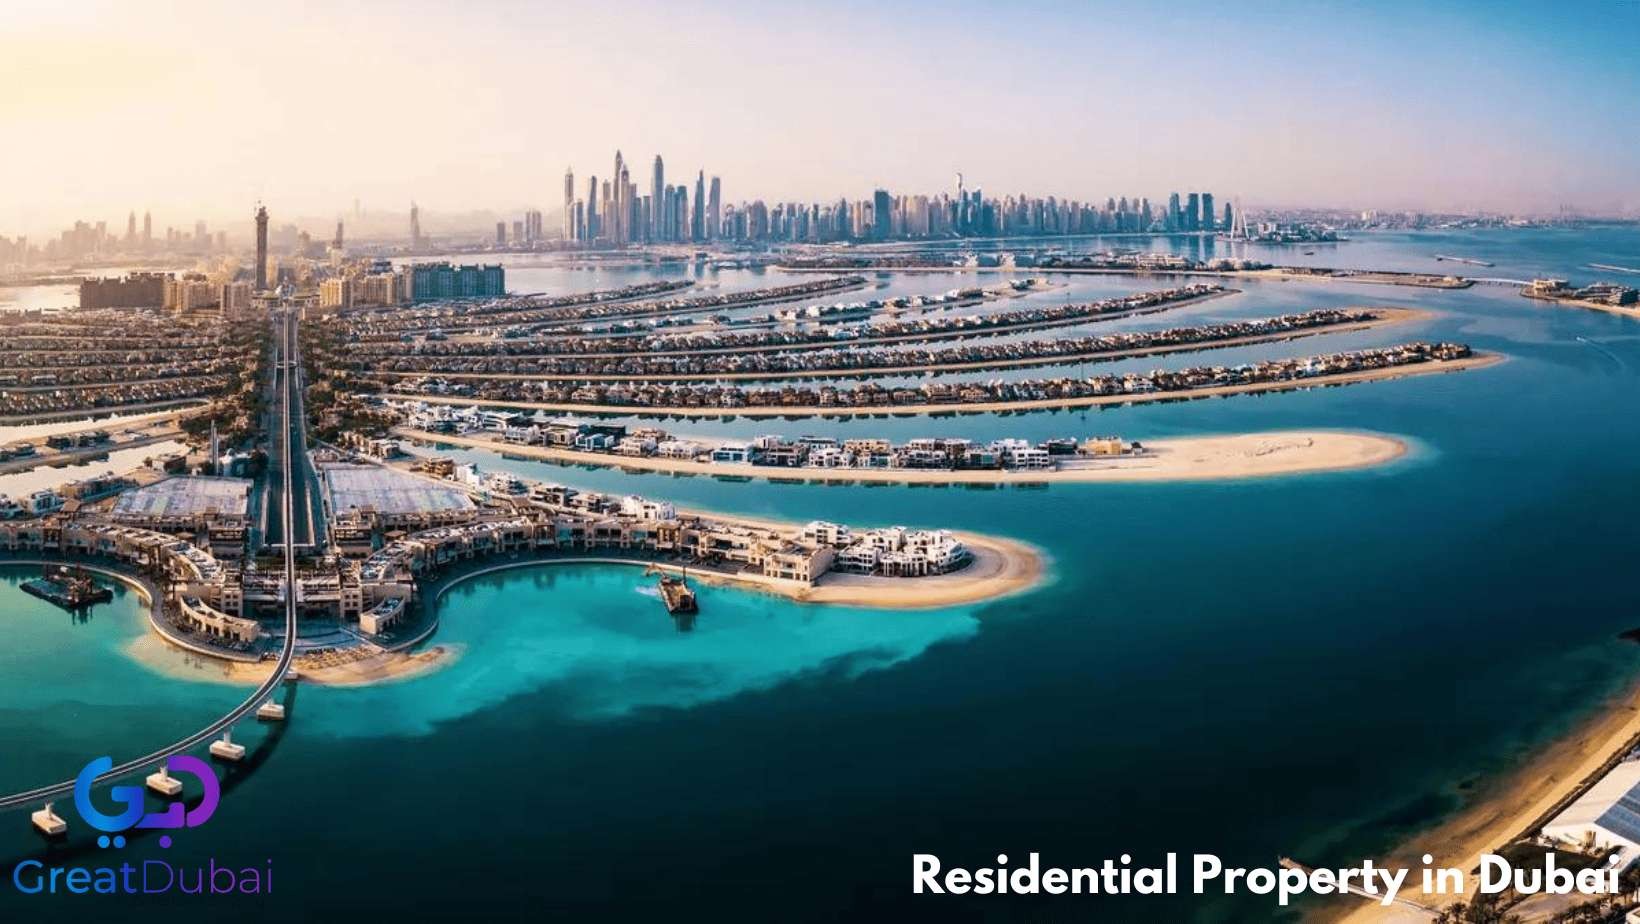 Residential Property in Dubai